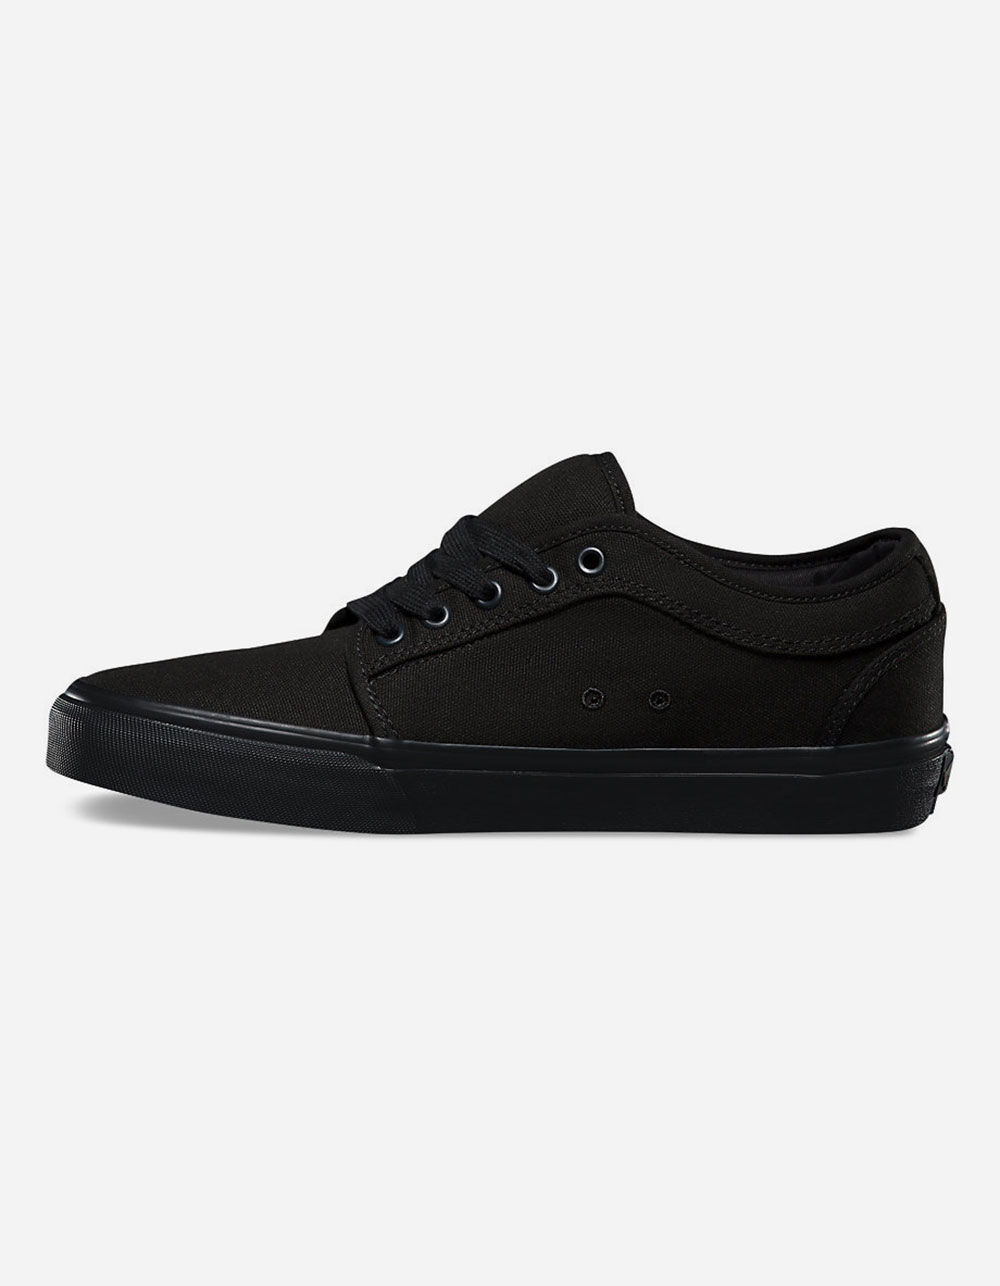 VANS Chukka Low Blackout Shoes - BLACK/BLACK | Tillys